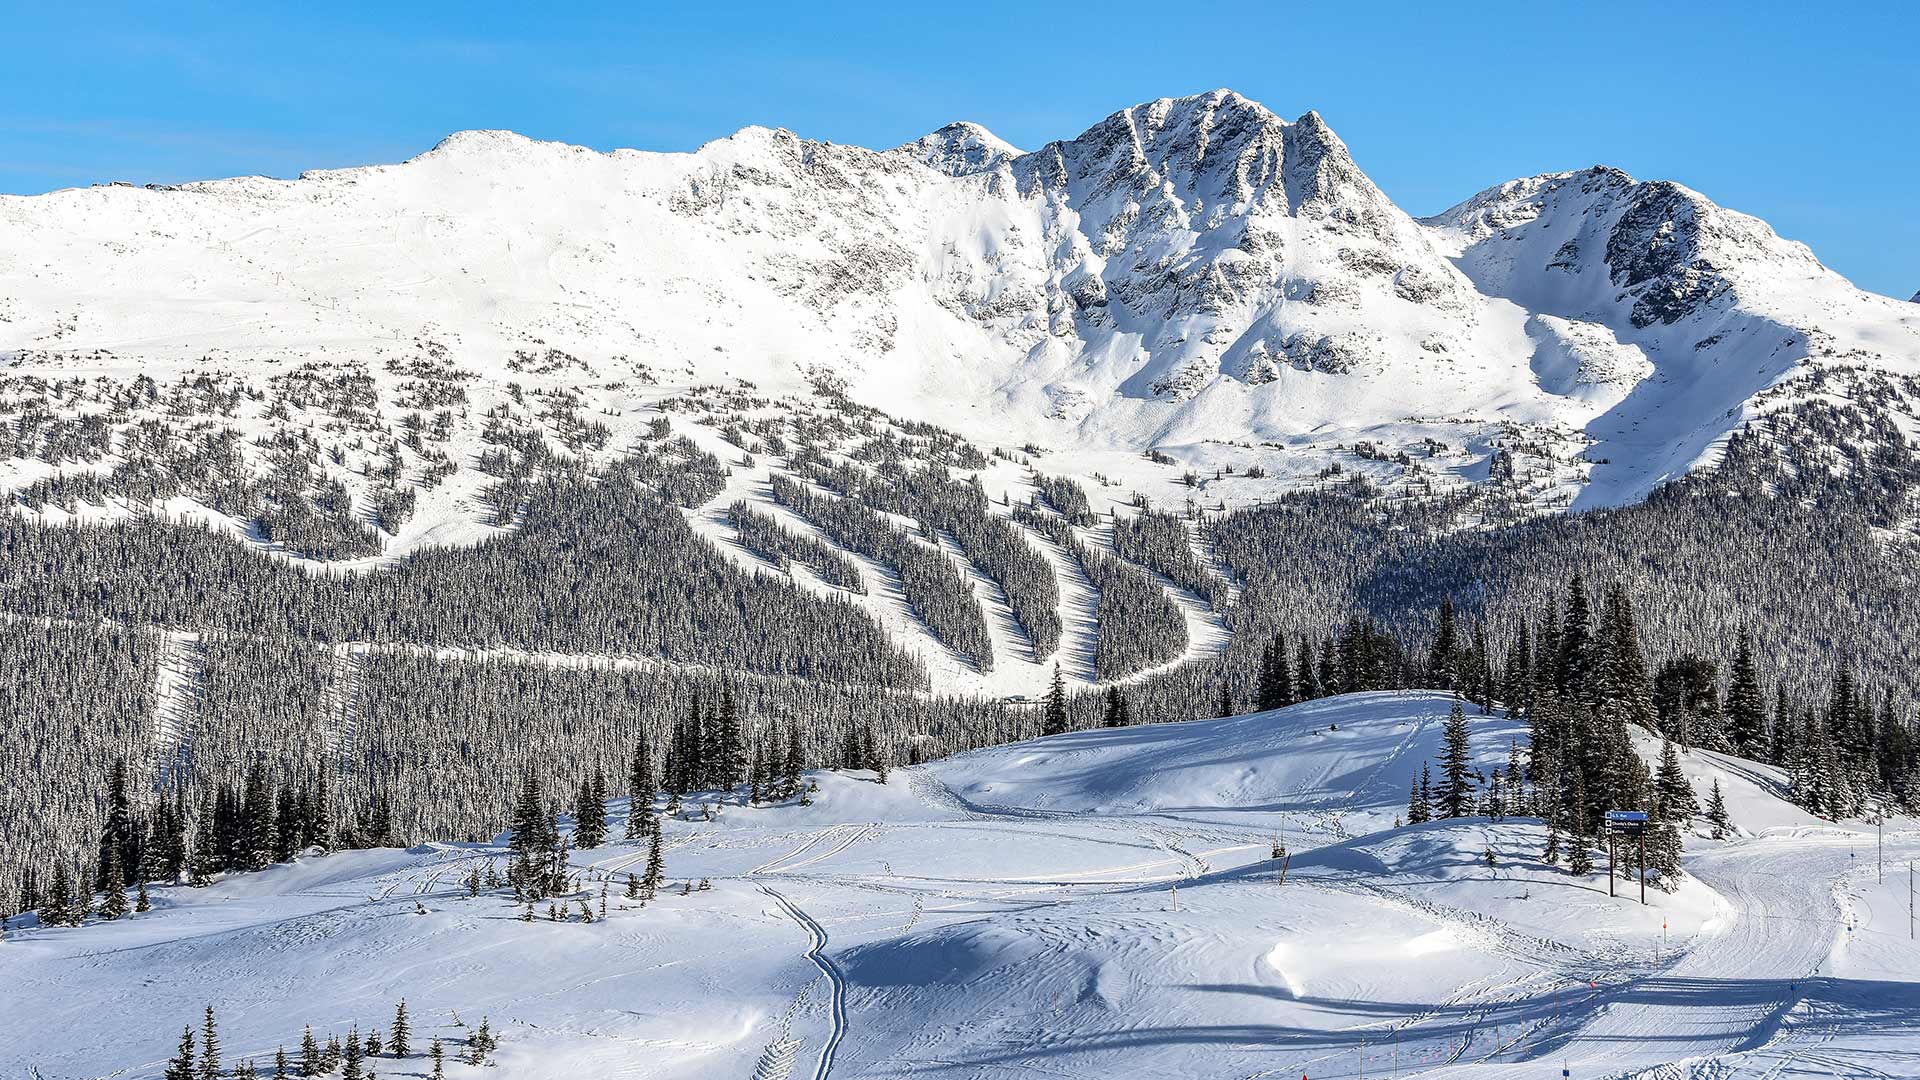 Ski slopes on Blackcomb Mountain in the winter